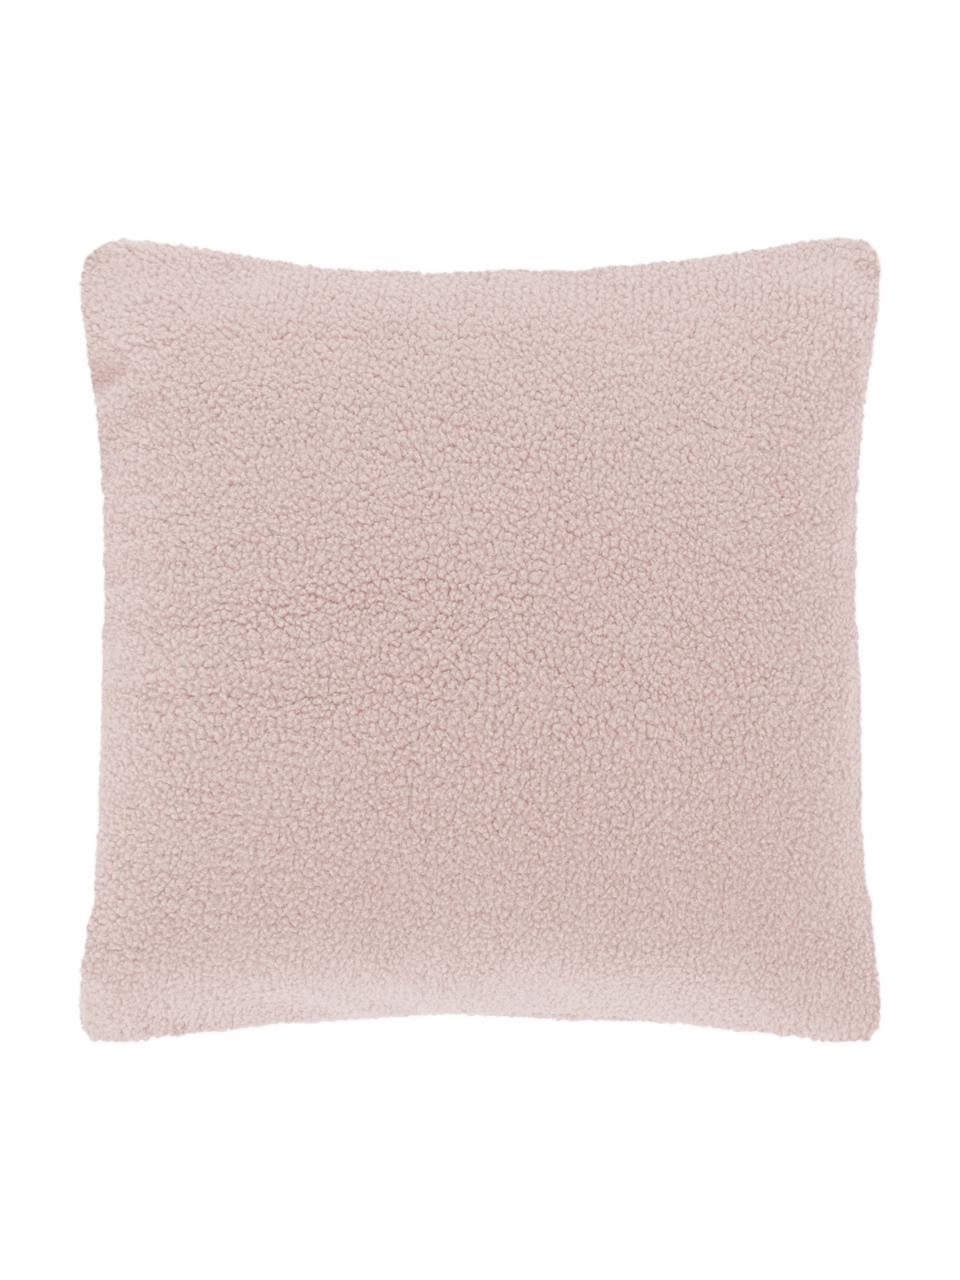 Federa arredo in teddy rosa Mille, Retro: 100% poliestere (teddy), Rosa, Larg. 45 x Lung. 45 cm